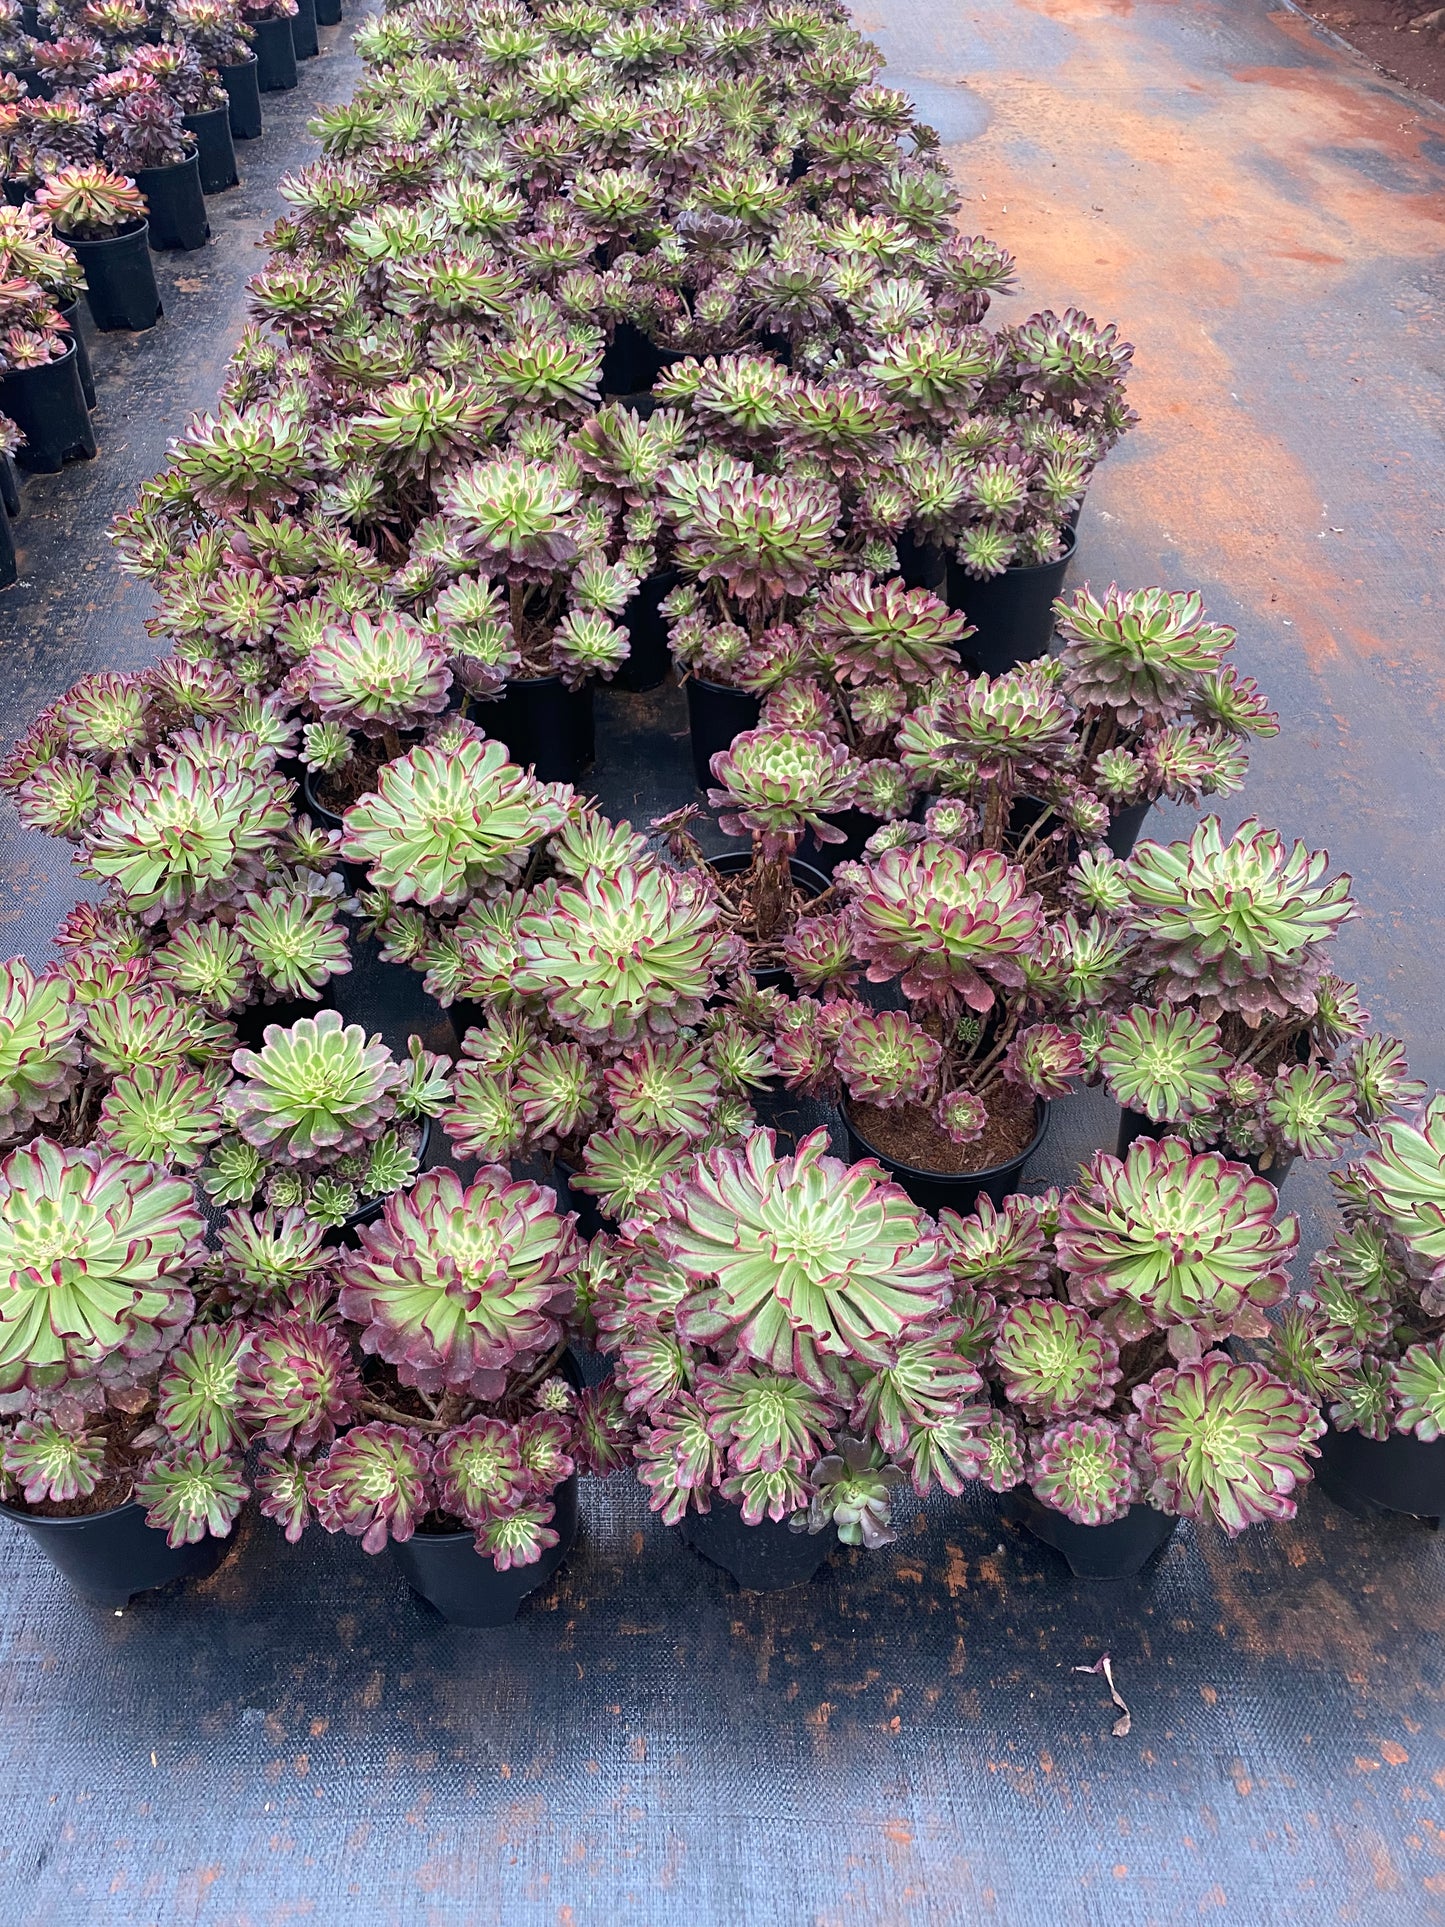 Qingyi cluster20-25cm/ 8-15 heads/ Aeonium cluster/ Variegated Natural Live Plants Succulents